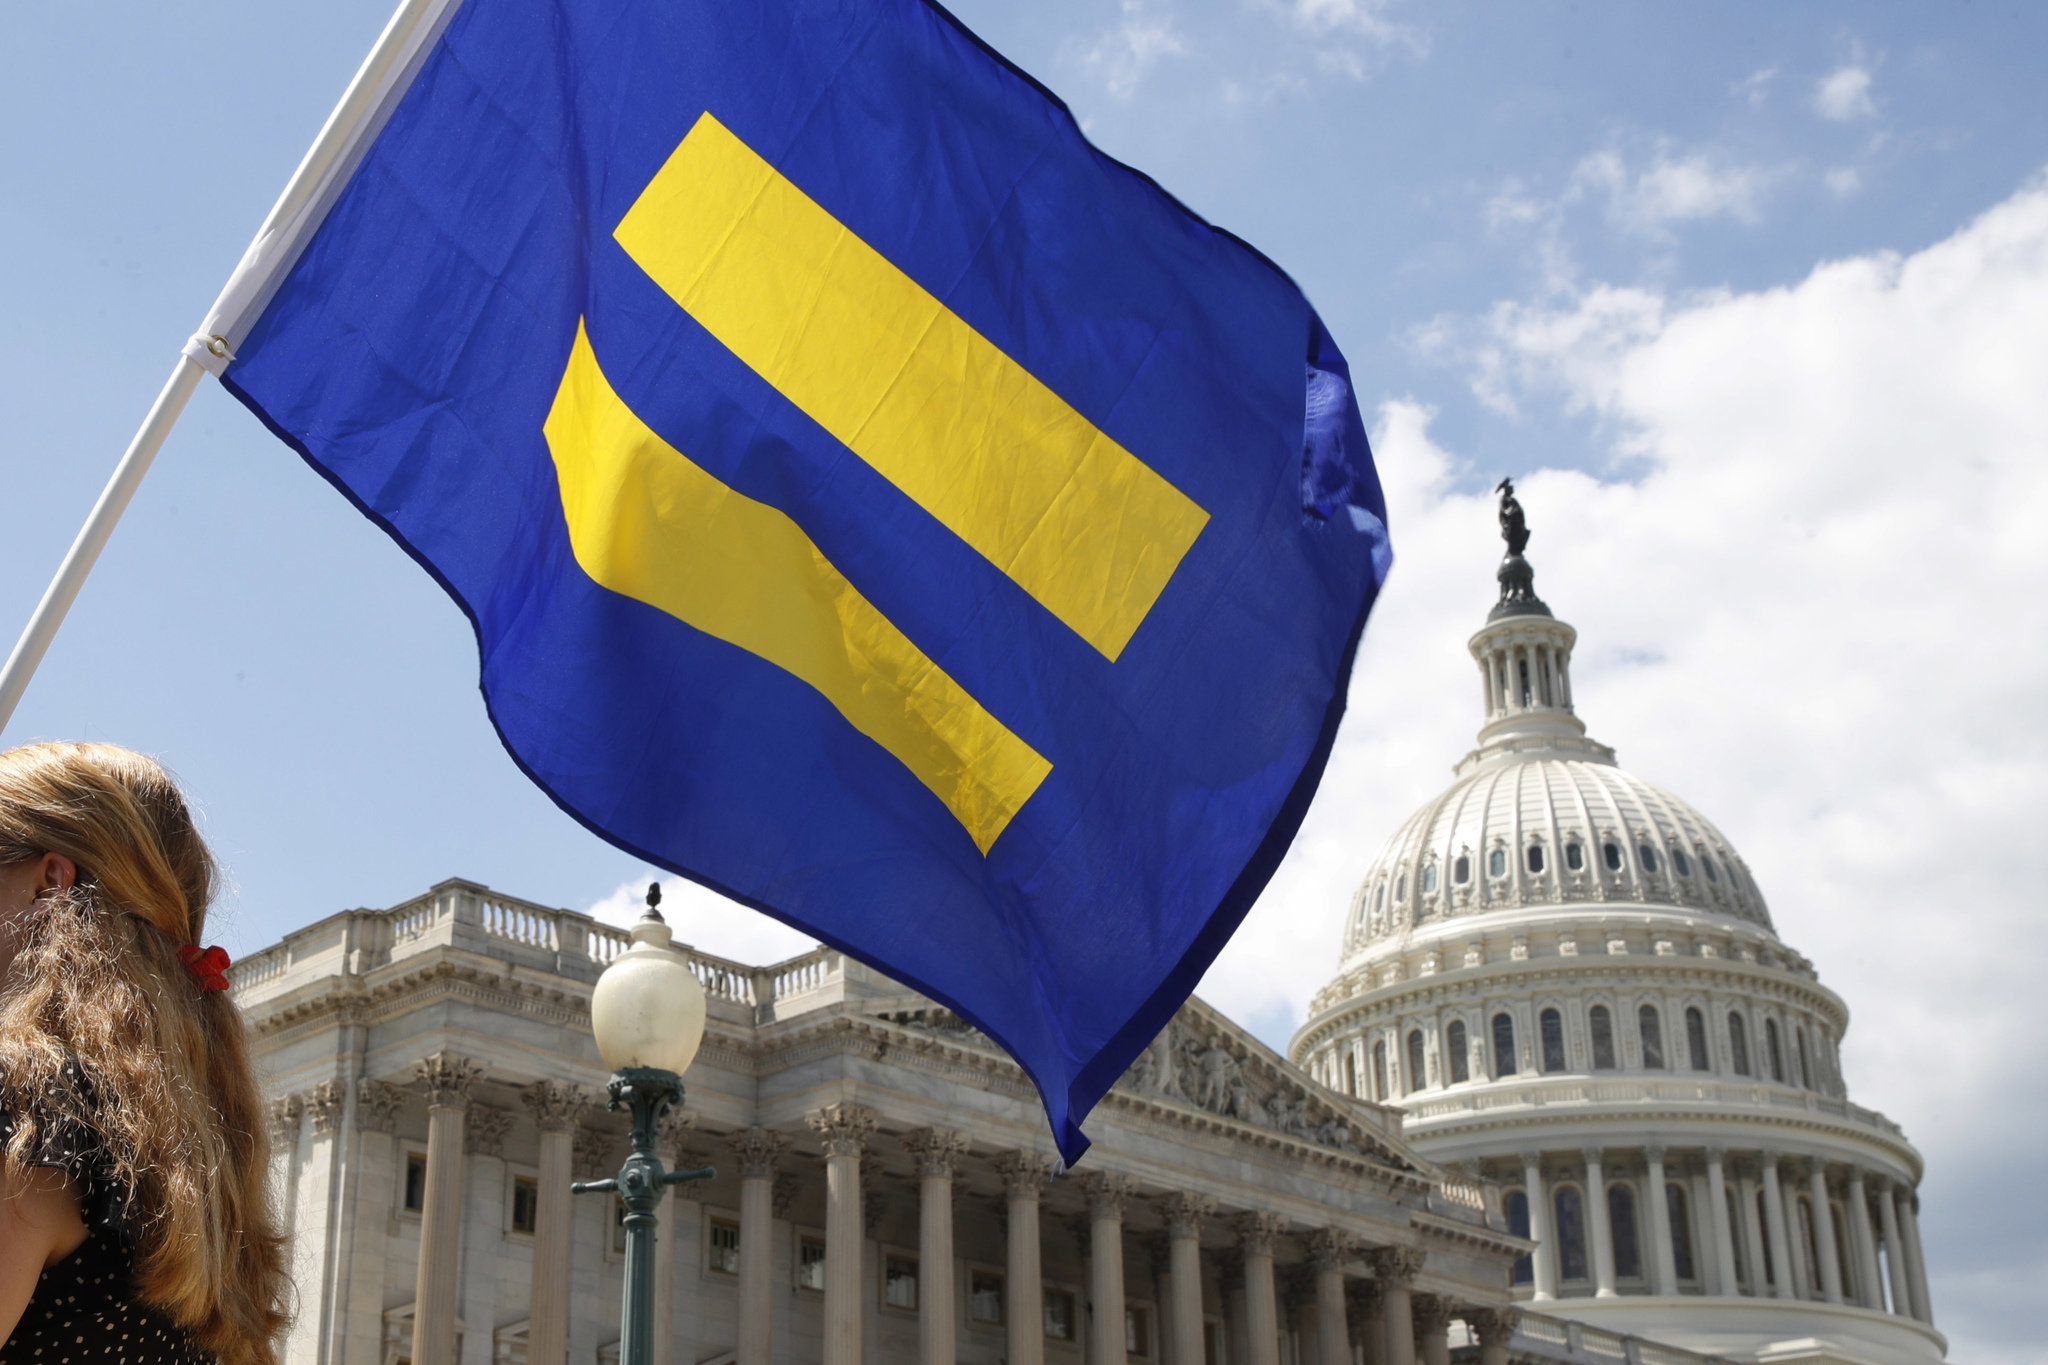 Trump asks Supreme Court to fast-track ruling on transgender military ban